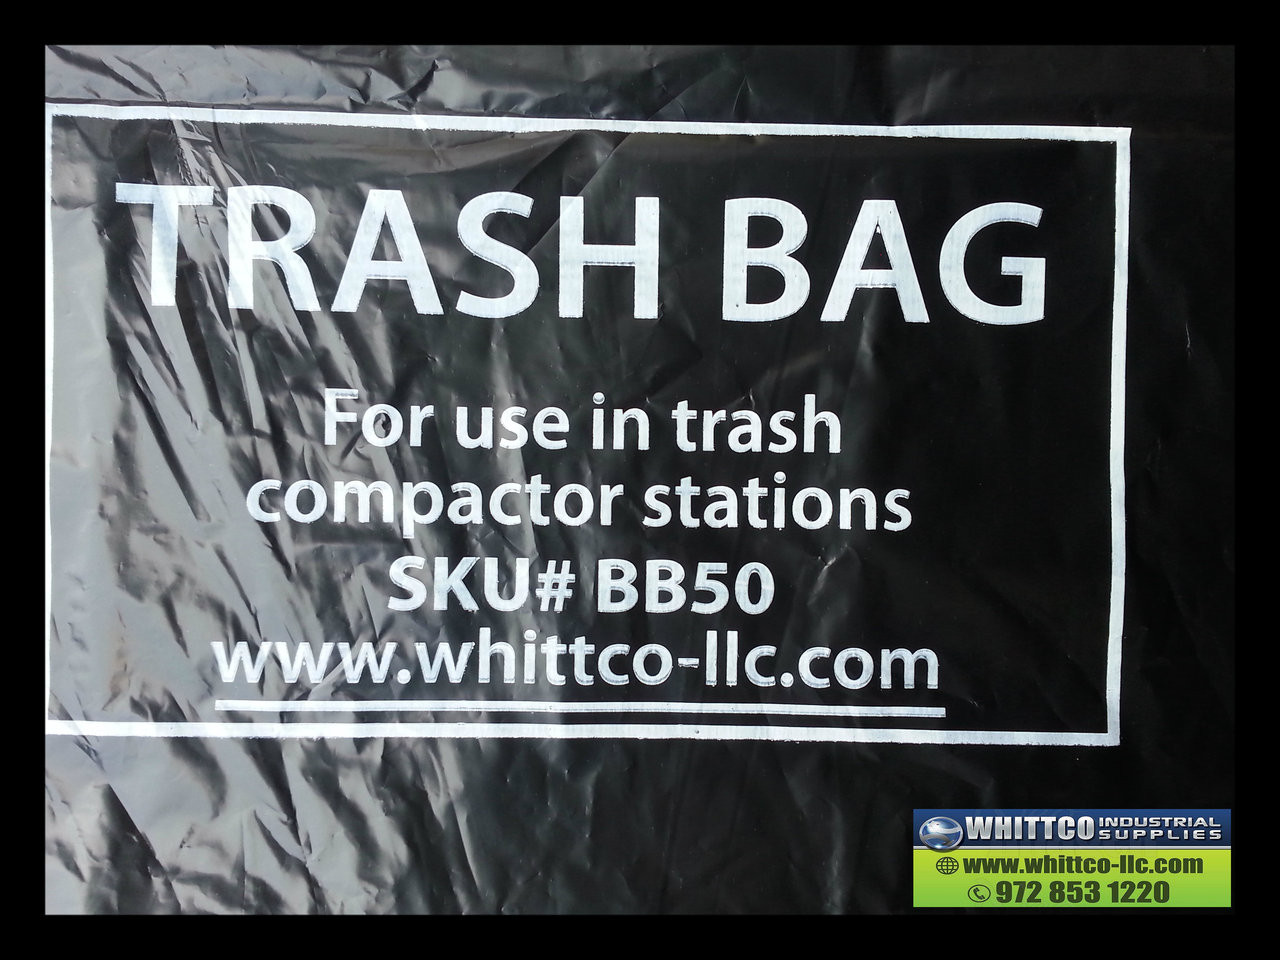 RopeSoapNDope. Hefty Trash Compactor Bag